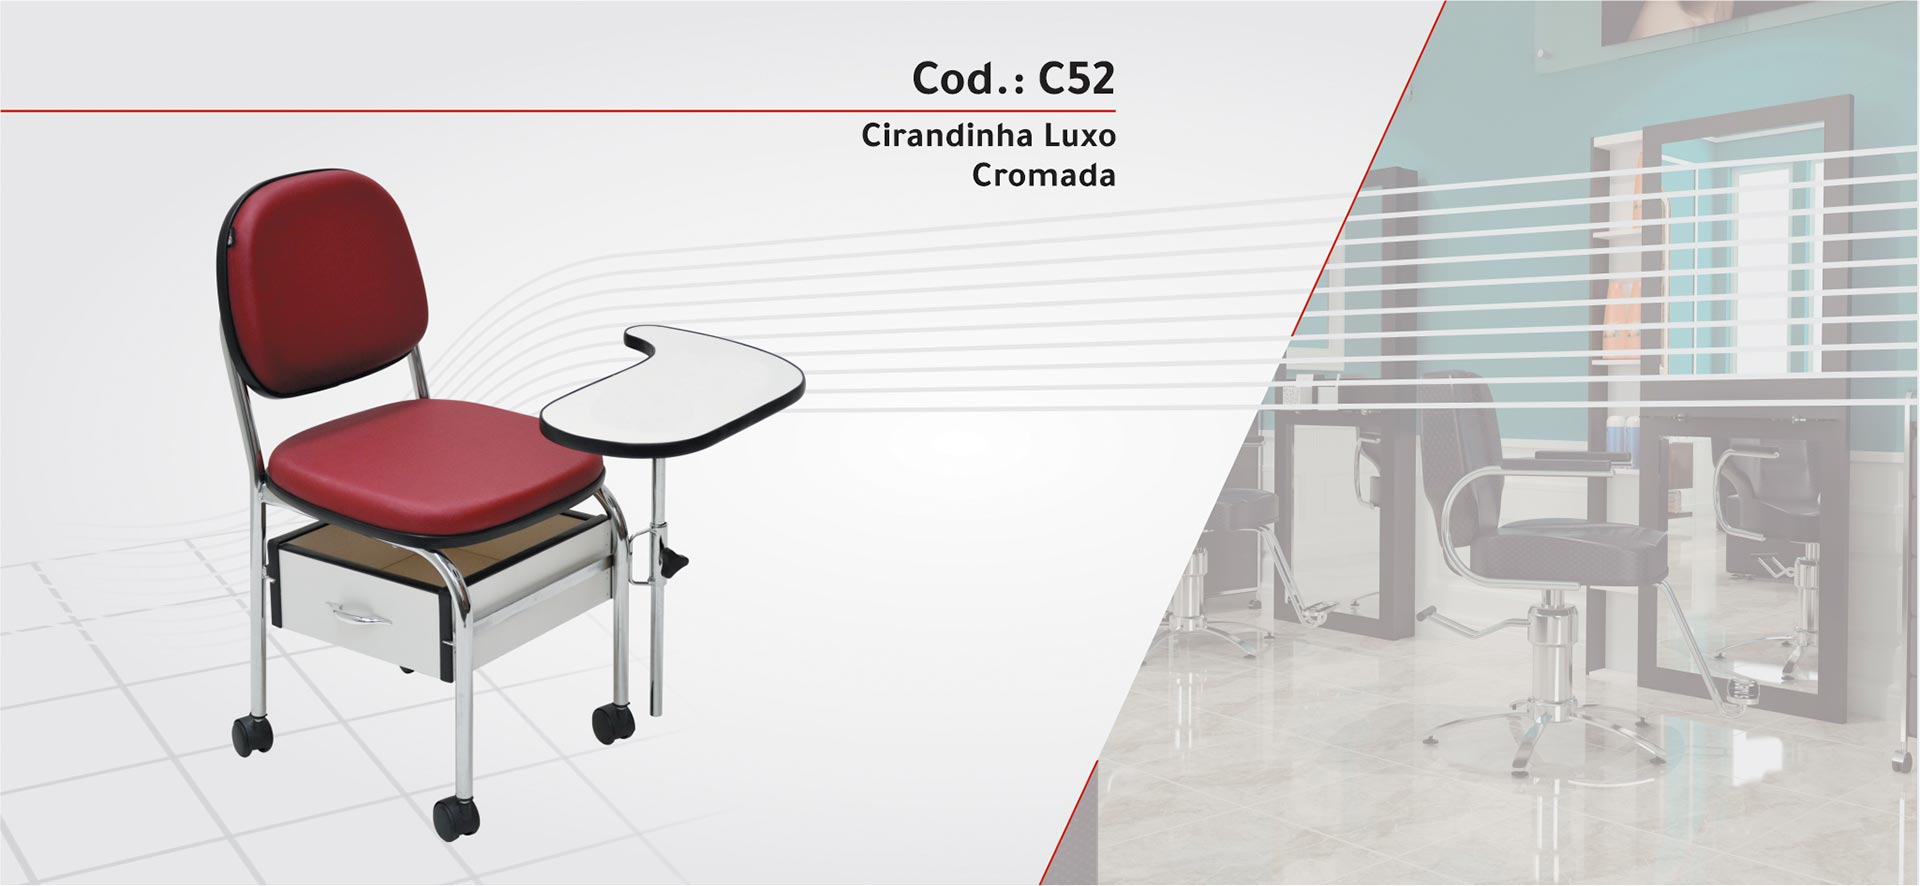 C52 - Cirandinha Luxo Cromada